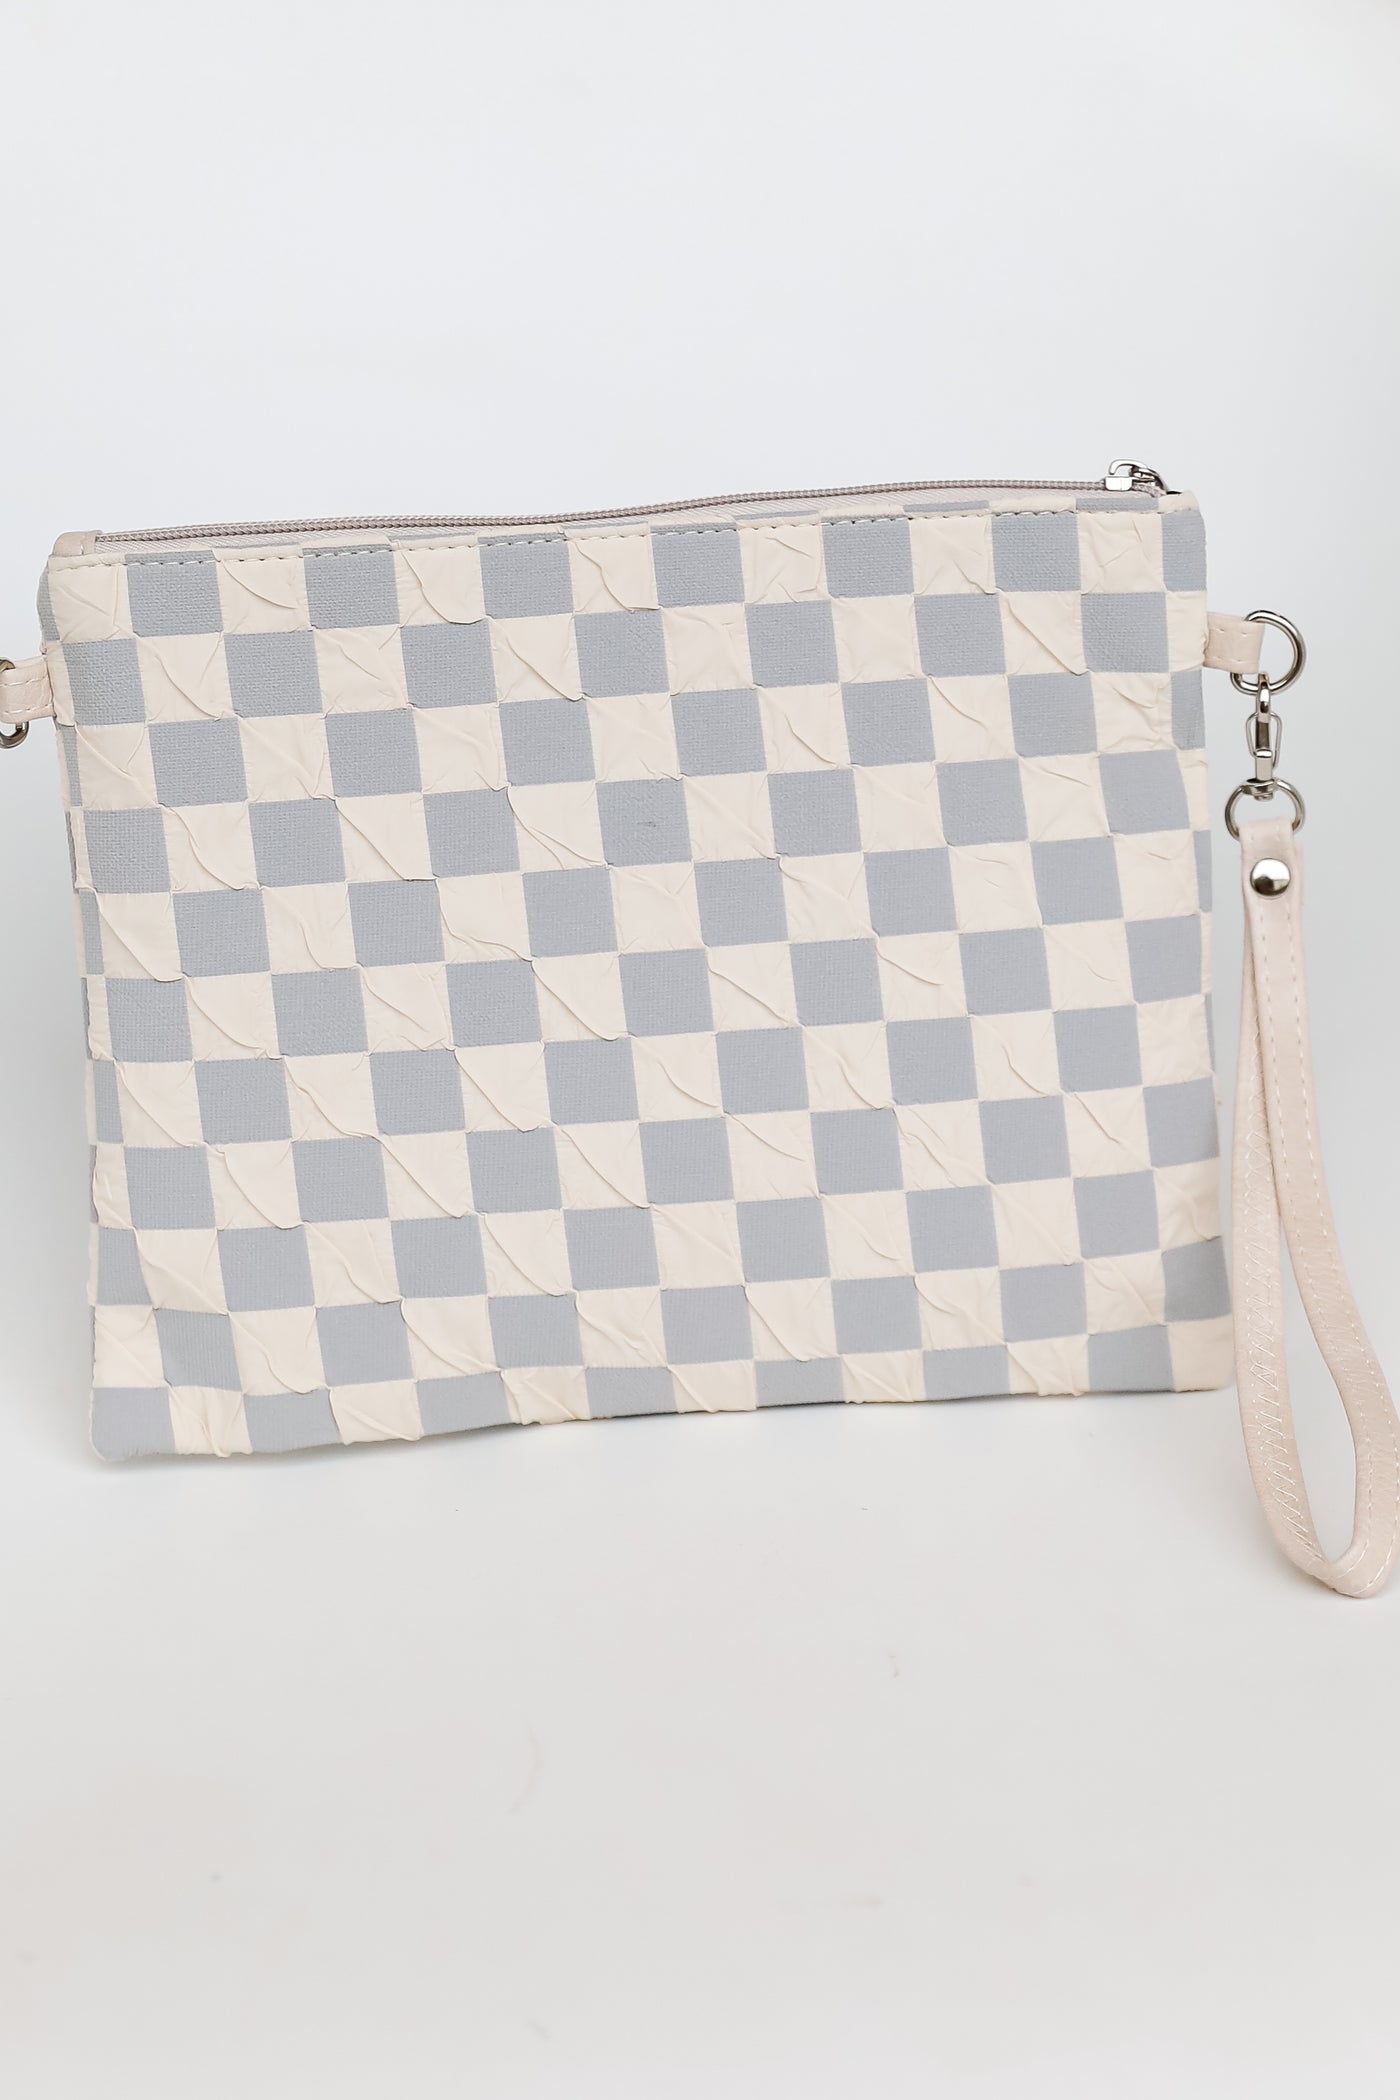 Grey Checkered Crossbody Bag close up